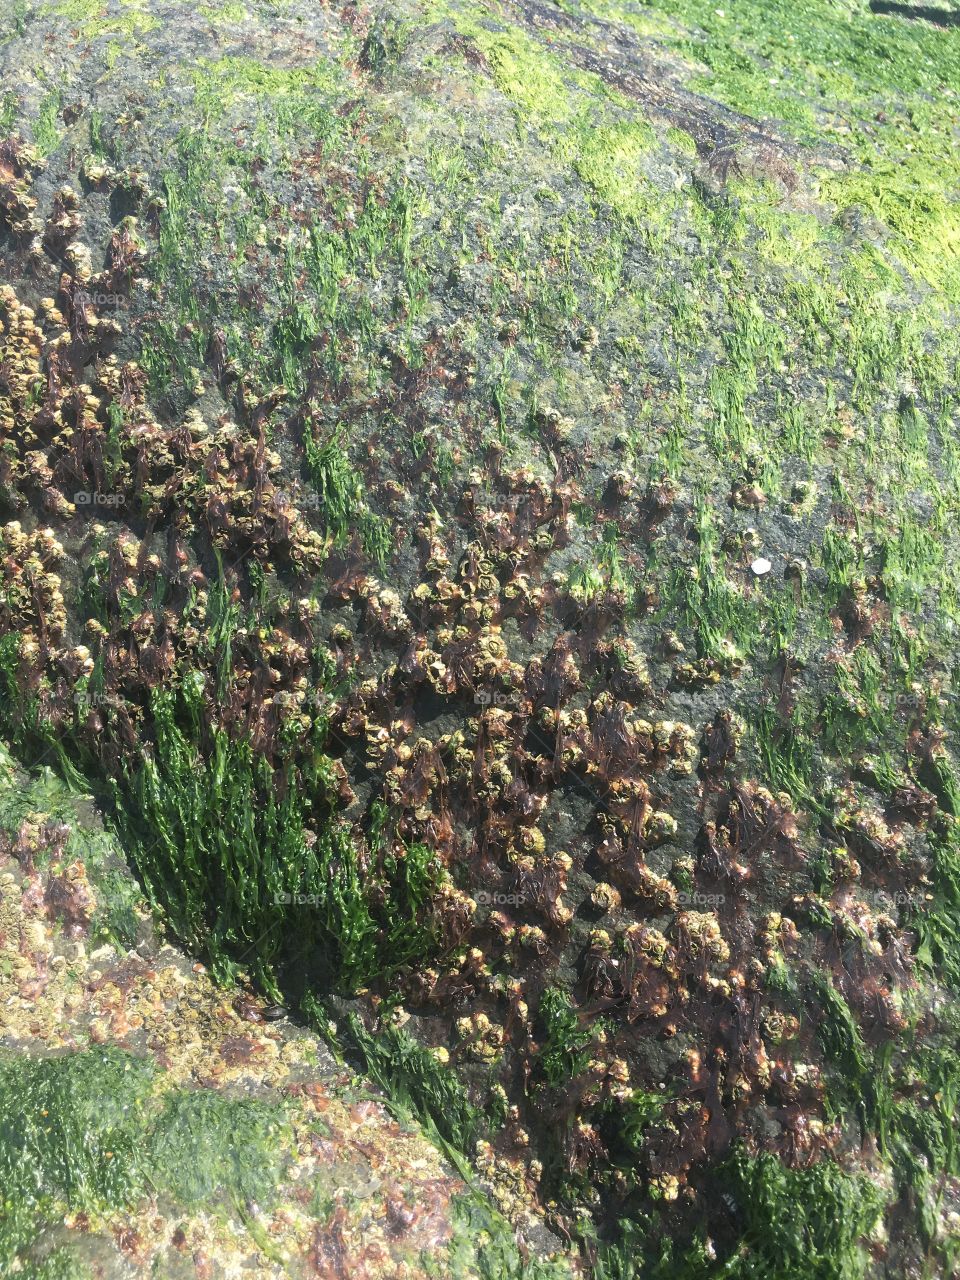 Barnacles and Algae